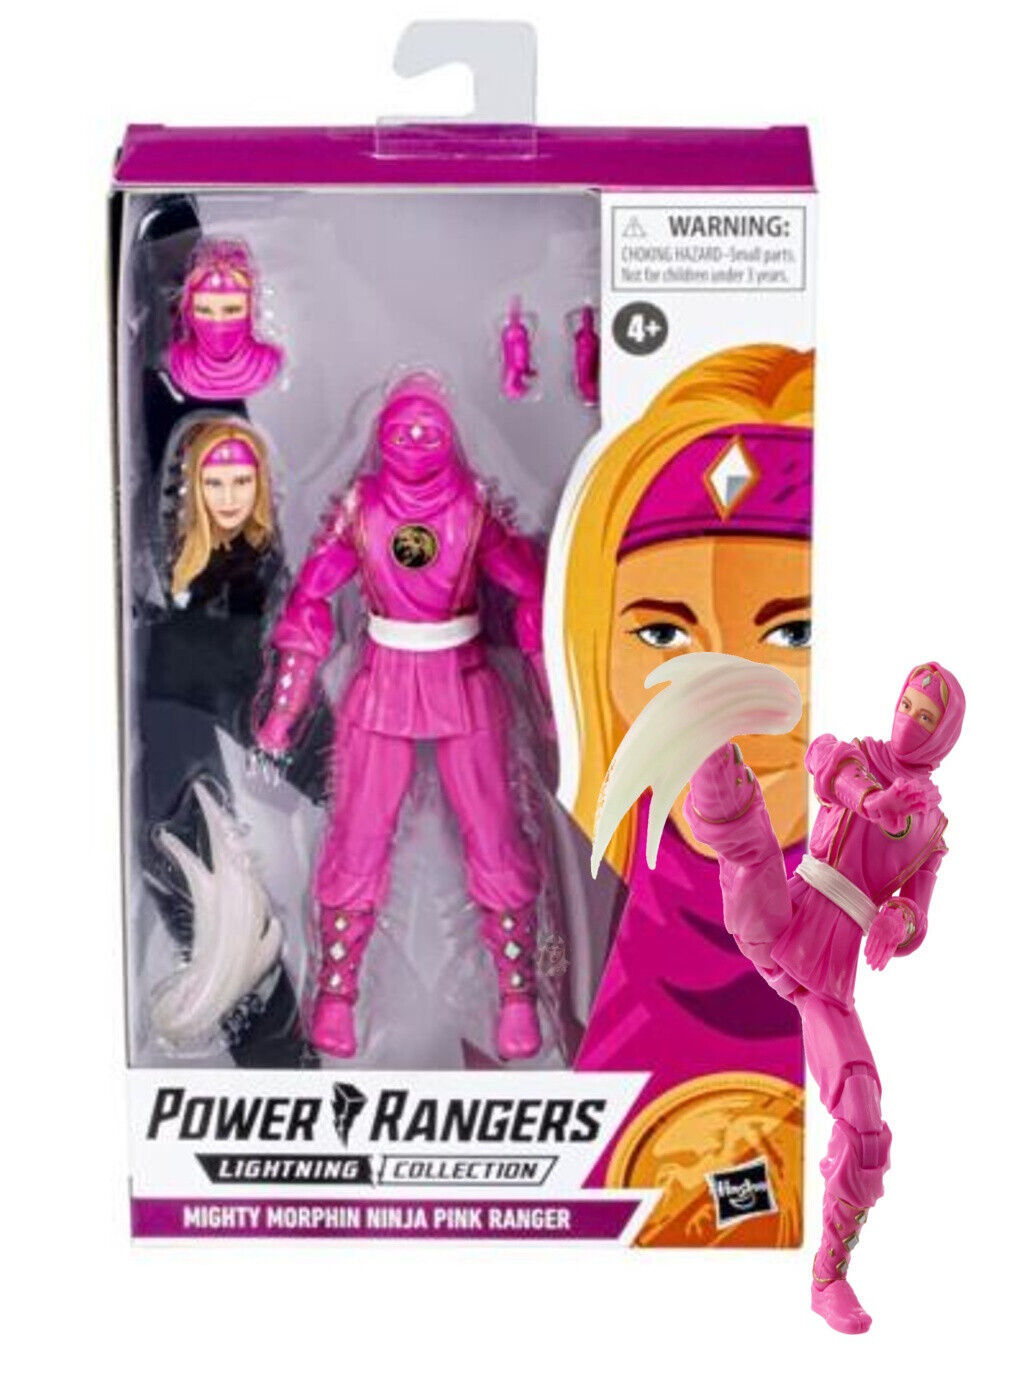 Power Rangers Lightning Collection Mighty Morphin Ninja Pink Ranger 6" Fig NIB - $16.88